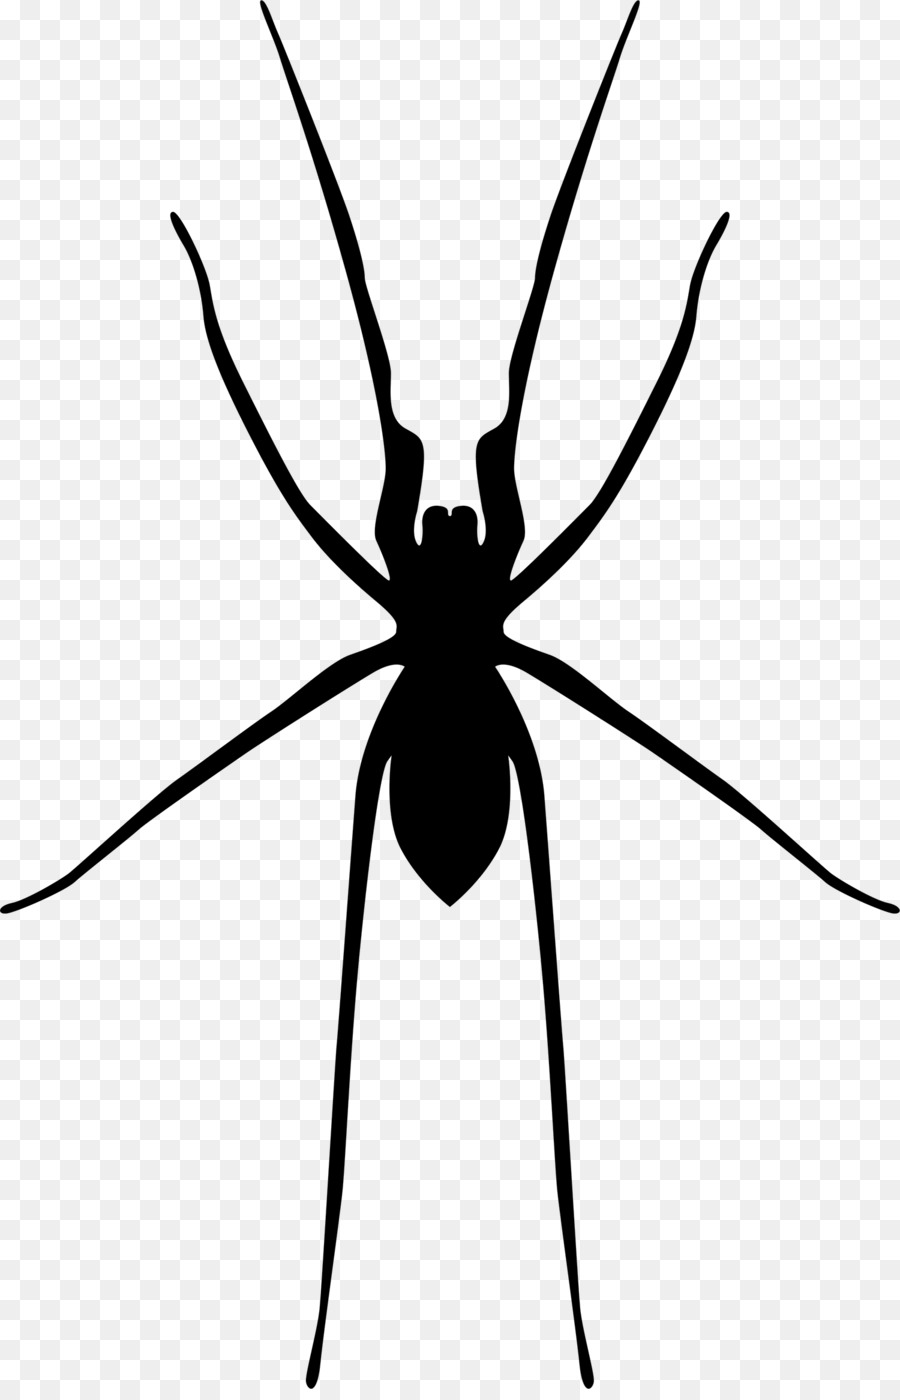 Spider web Widow spiders - spider png download - 1500*2315 - Free Transparent Spider png Download.